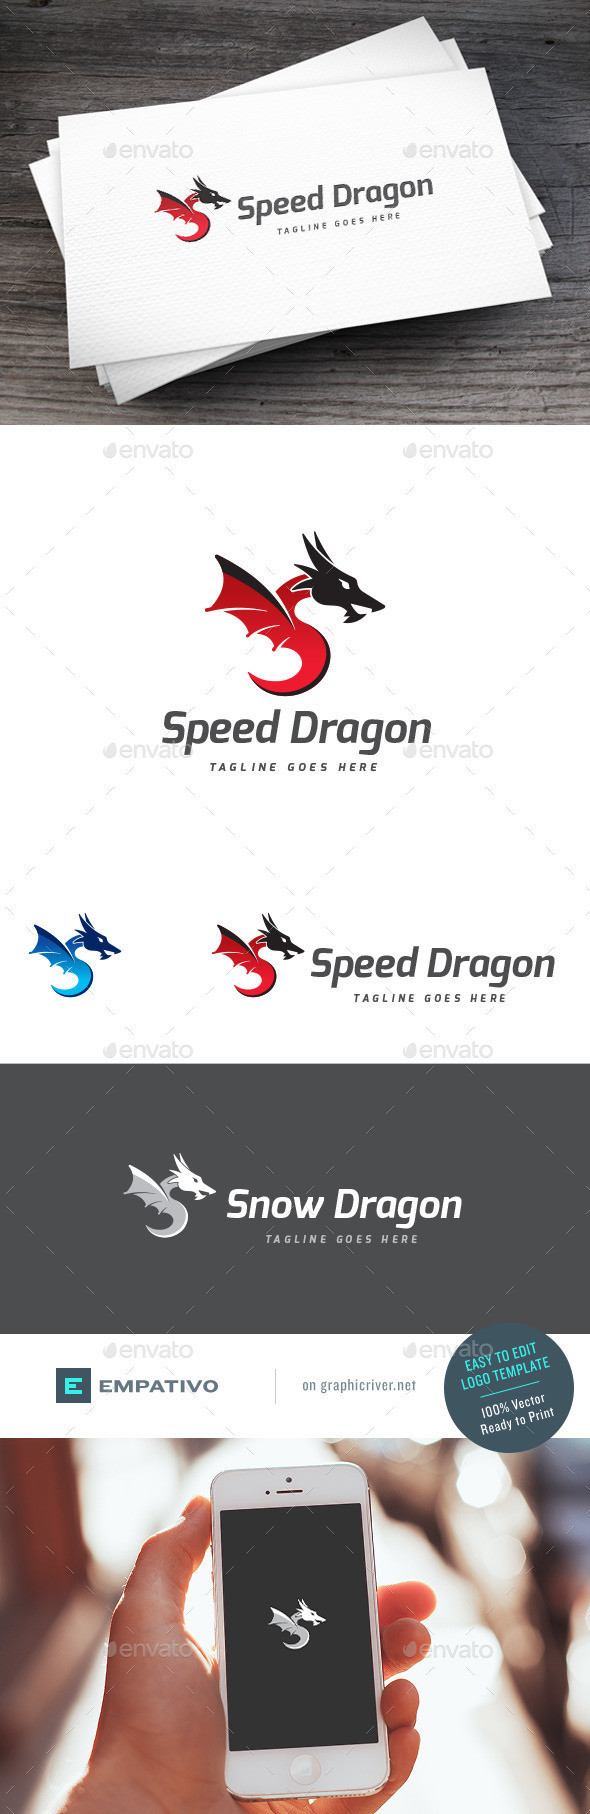 Speed dragon logo template